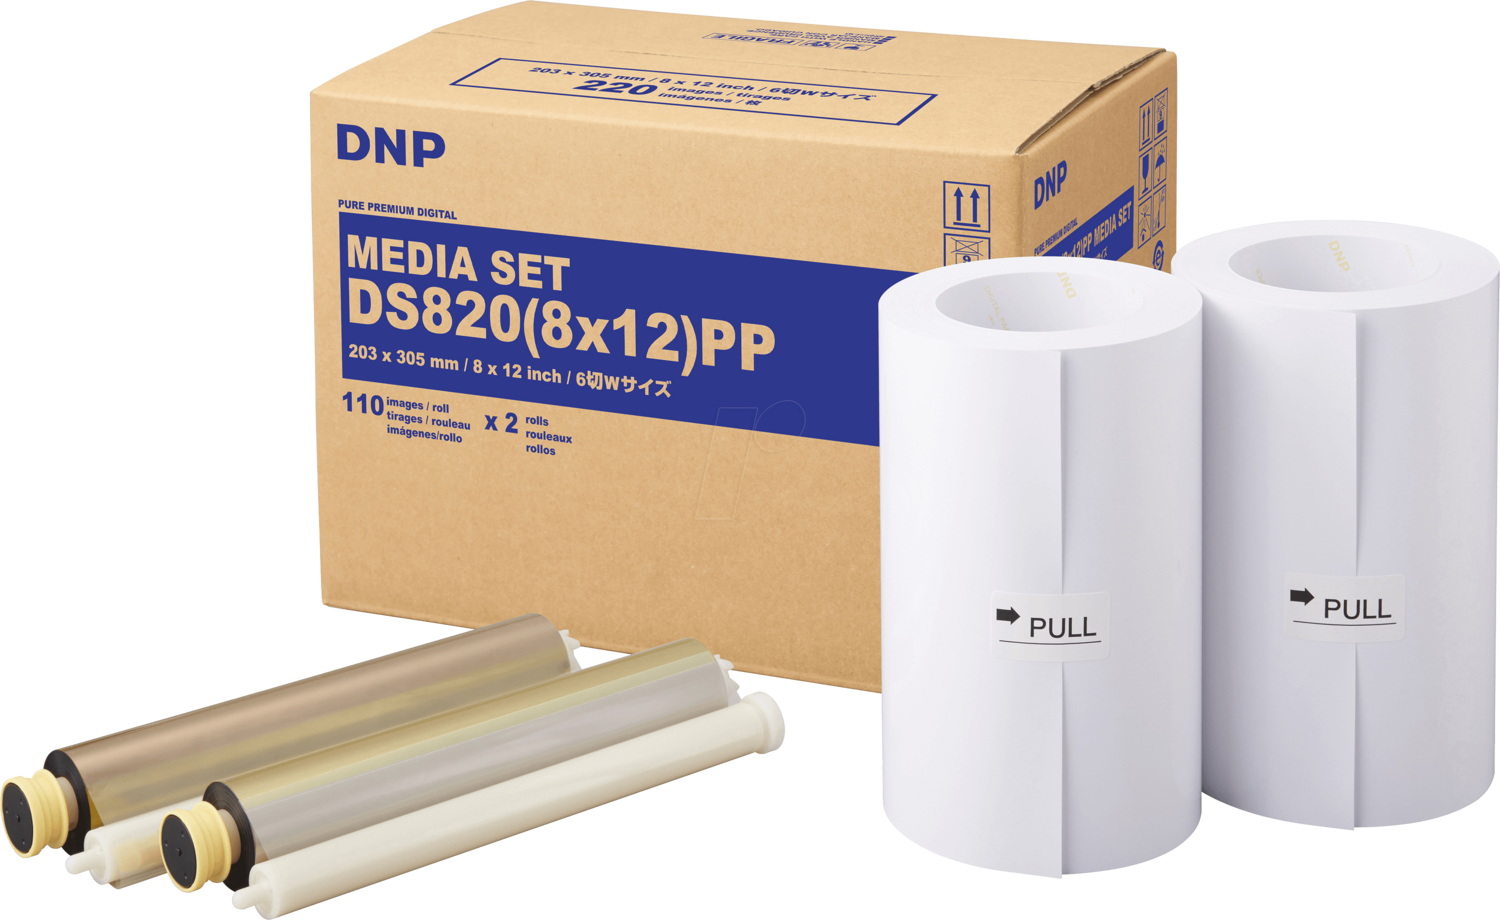 DNP Media Kit for DS 820 20.3x30.5cm / 8x12 Inch 220 photos